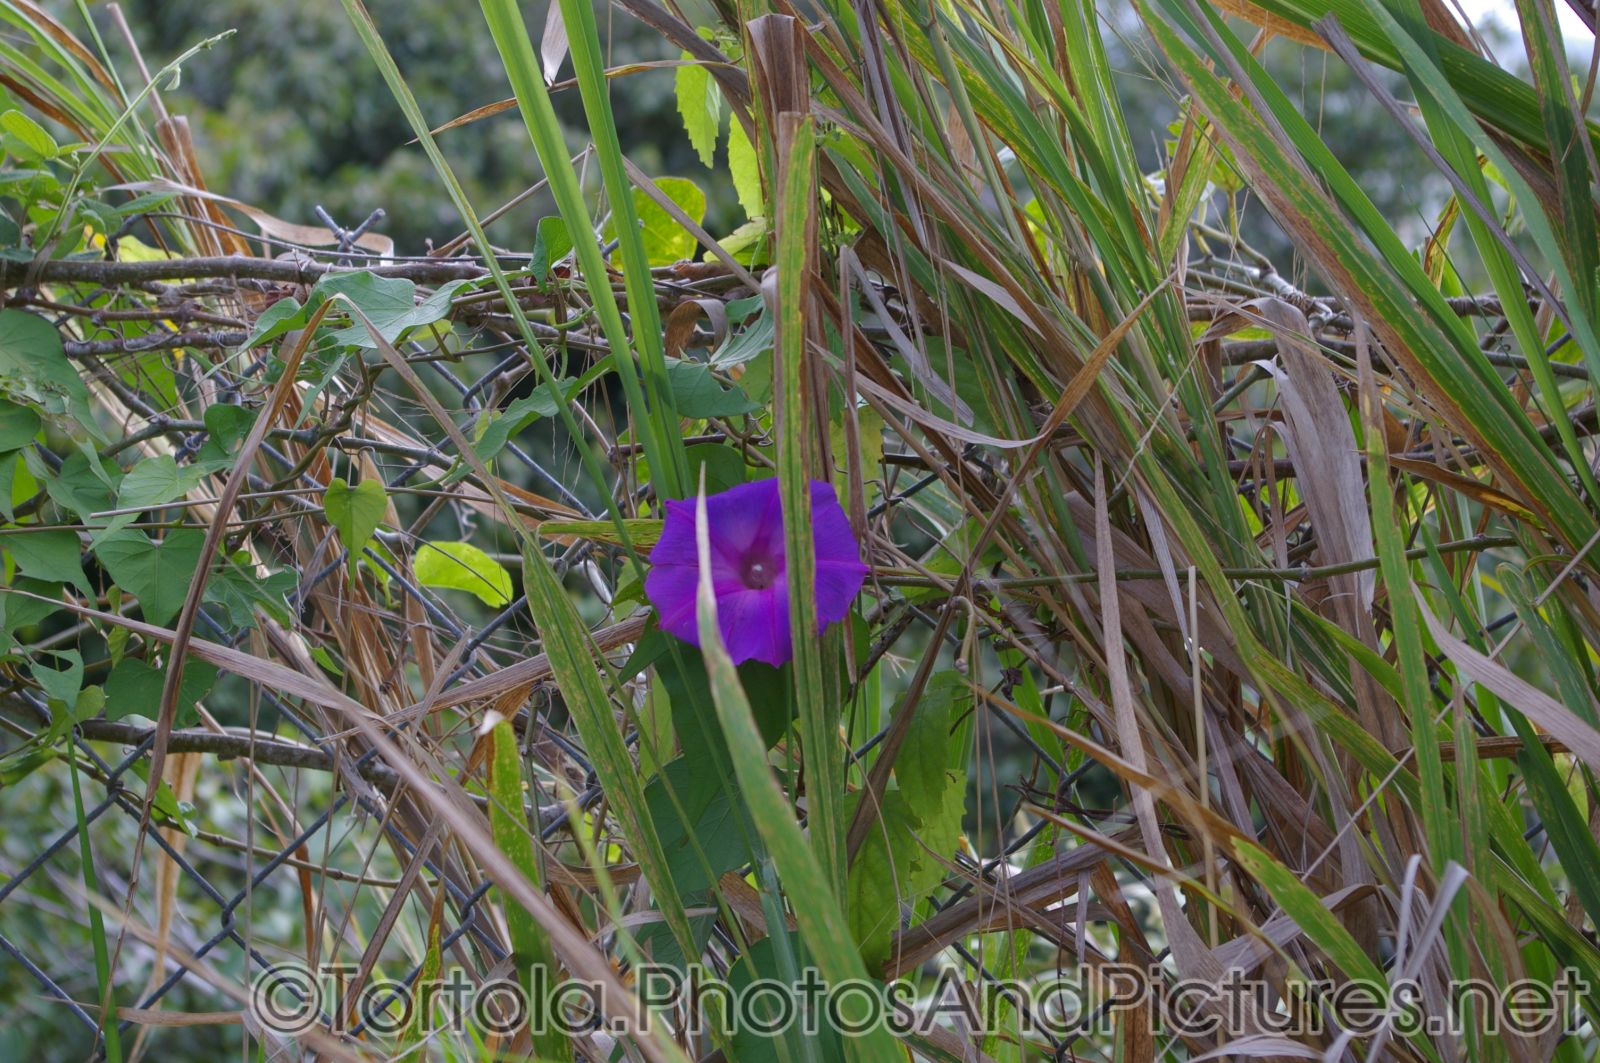 Purple flower and grass in Tortola.jpg
